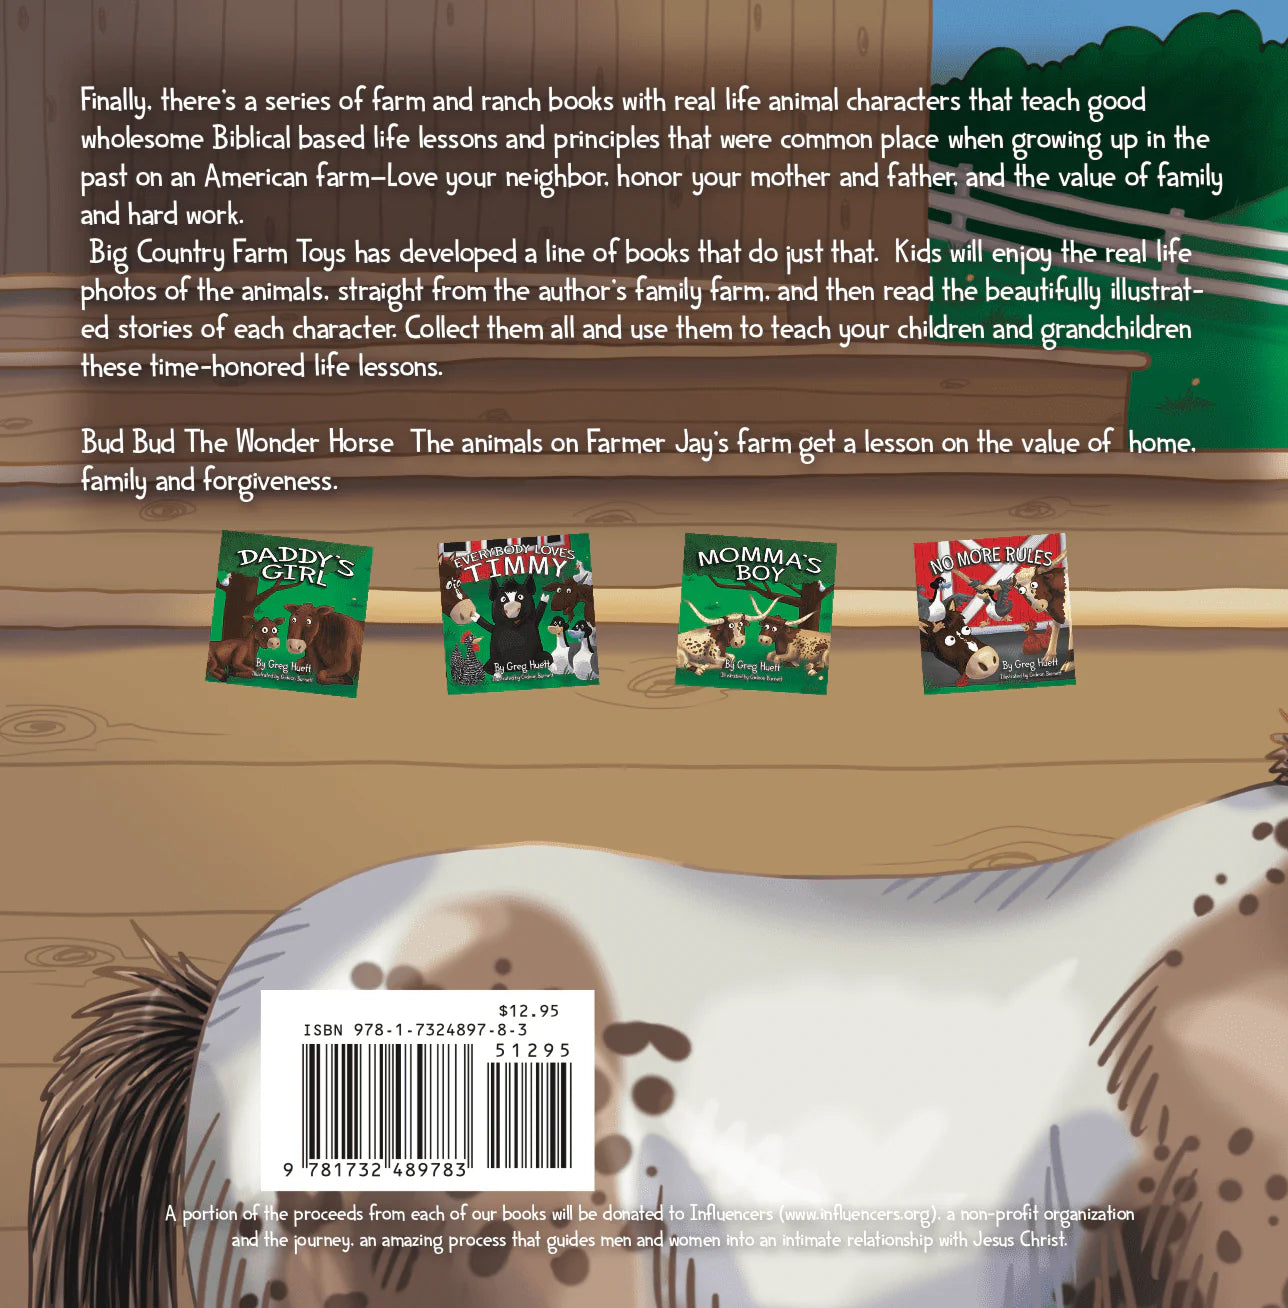 Hardcover: Bud Bud the Wonder Horse by Greg Huett